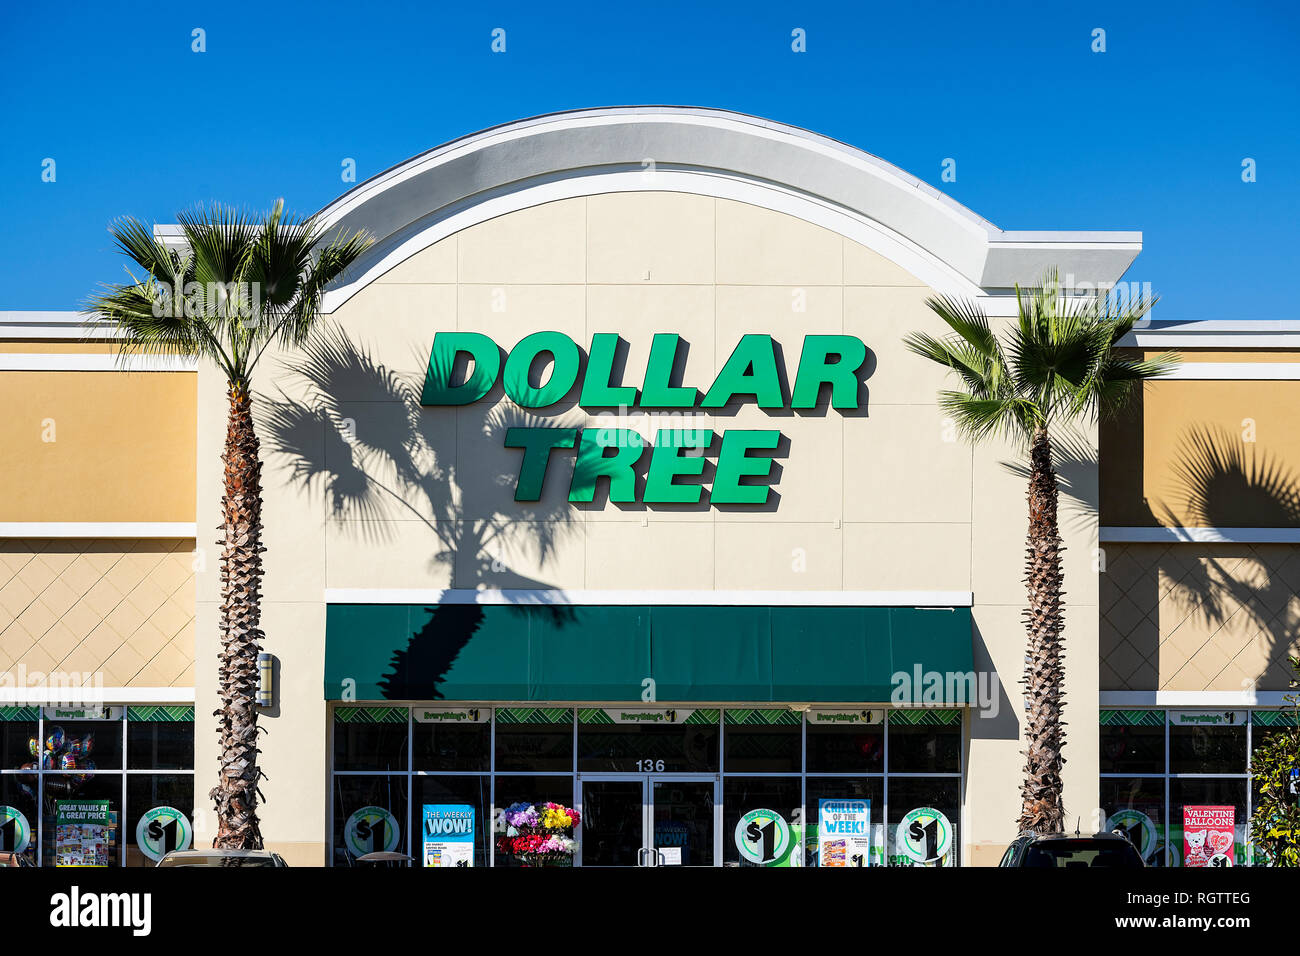 Dollor Tree store exterior and sign, Orlando, Florida, USA. Stock Photo